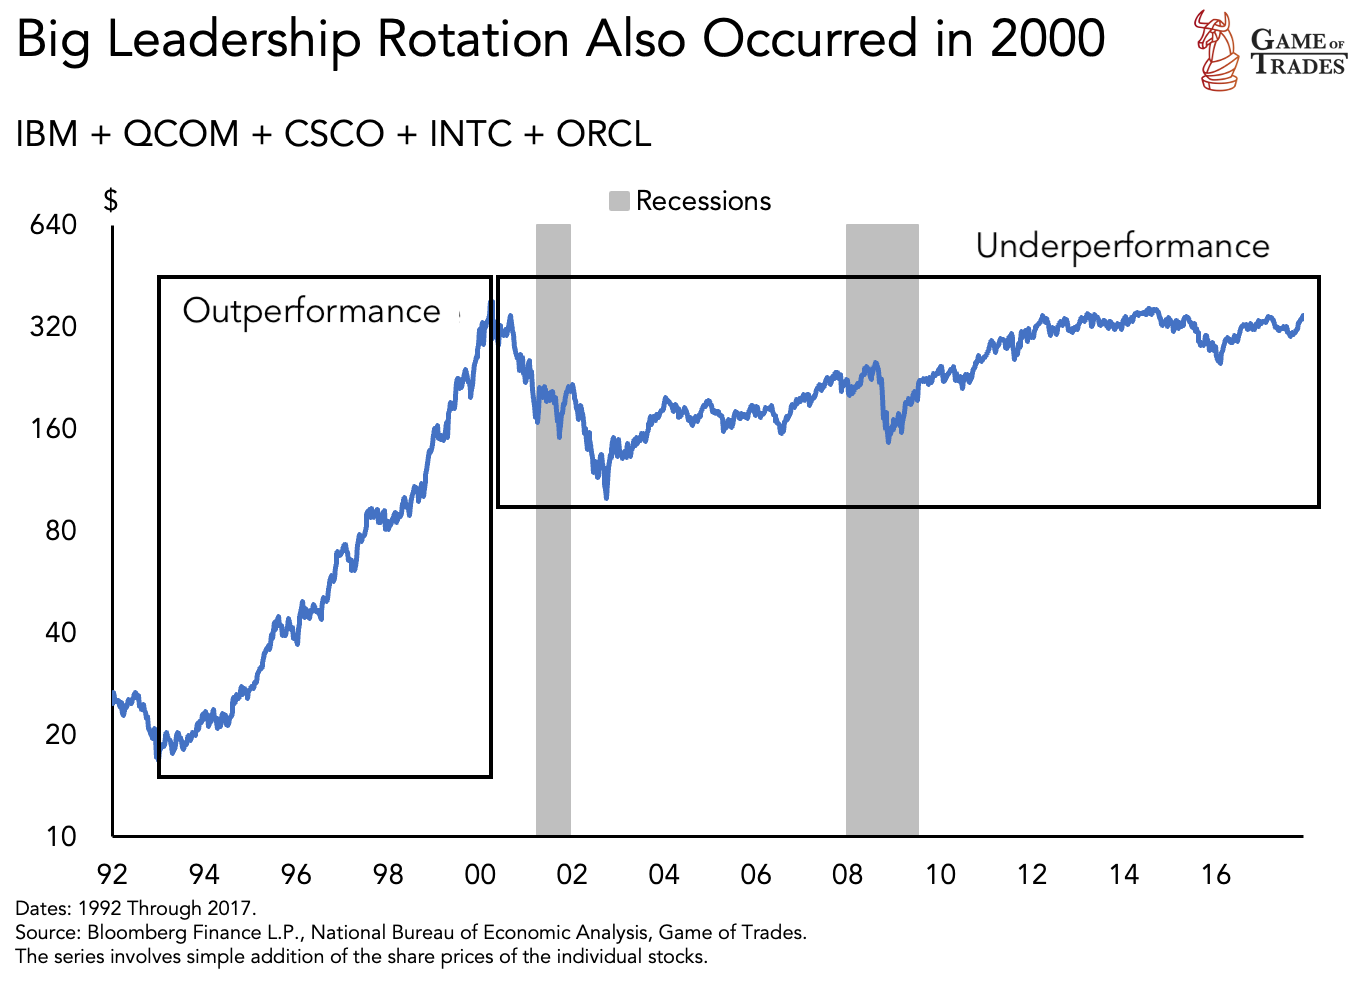 Recession Impact on Leadership Rotation